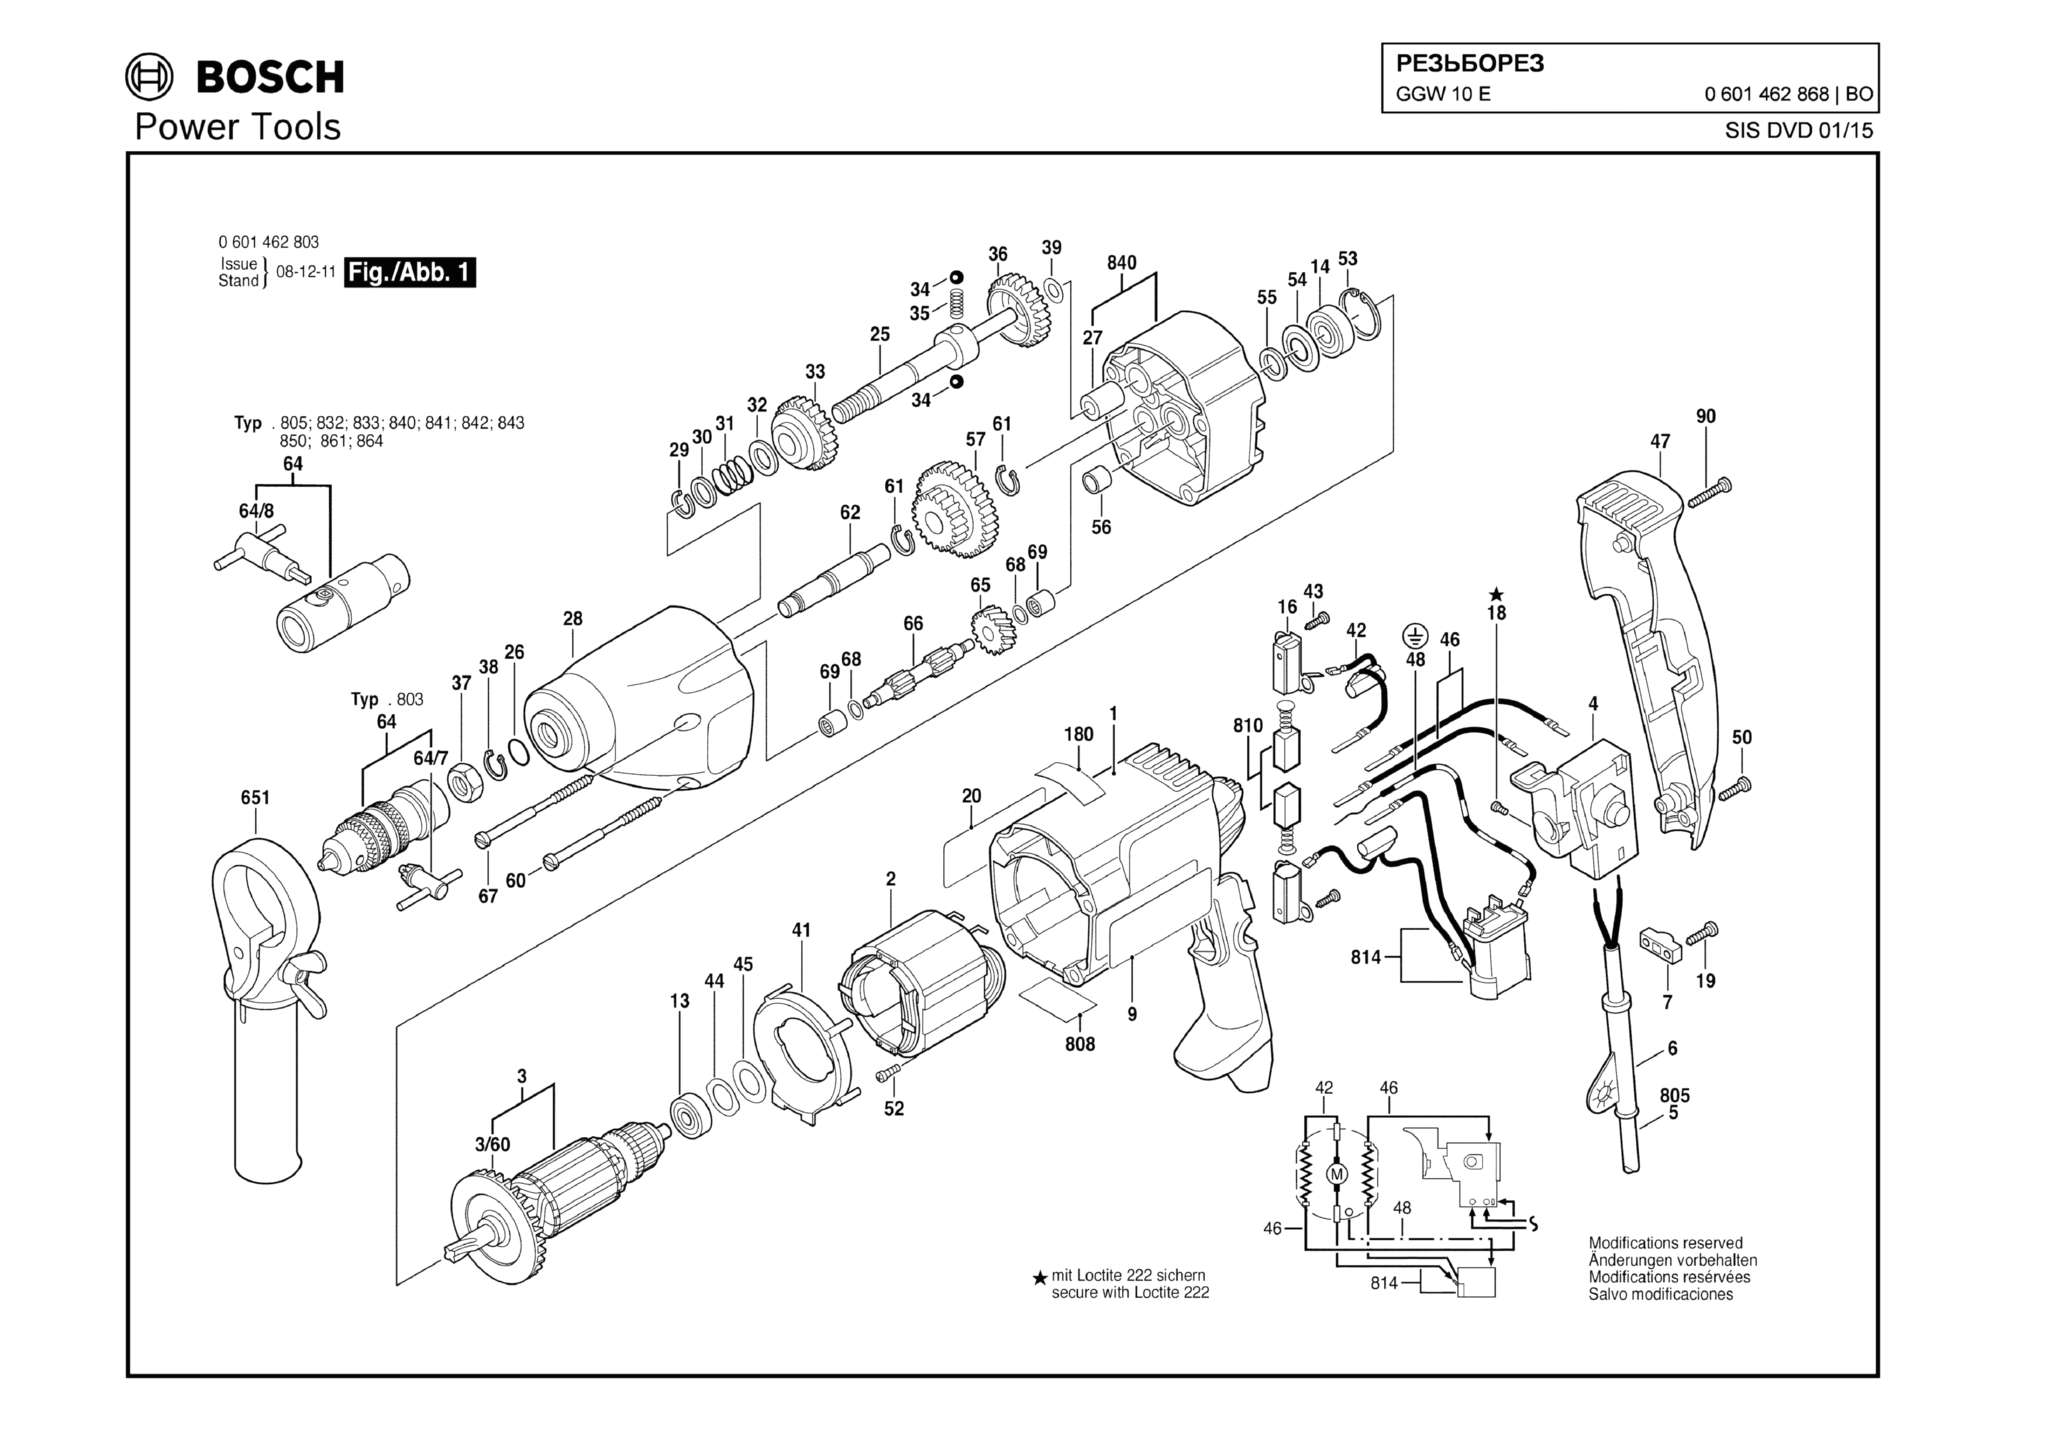 Запчасти, схема и деталировка Bosch GGW 10 E (ТИП 0601462868)